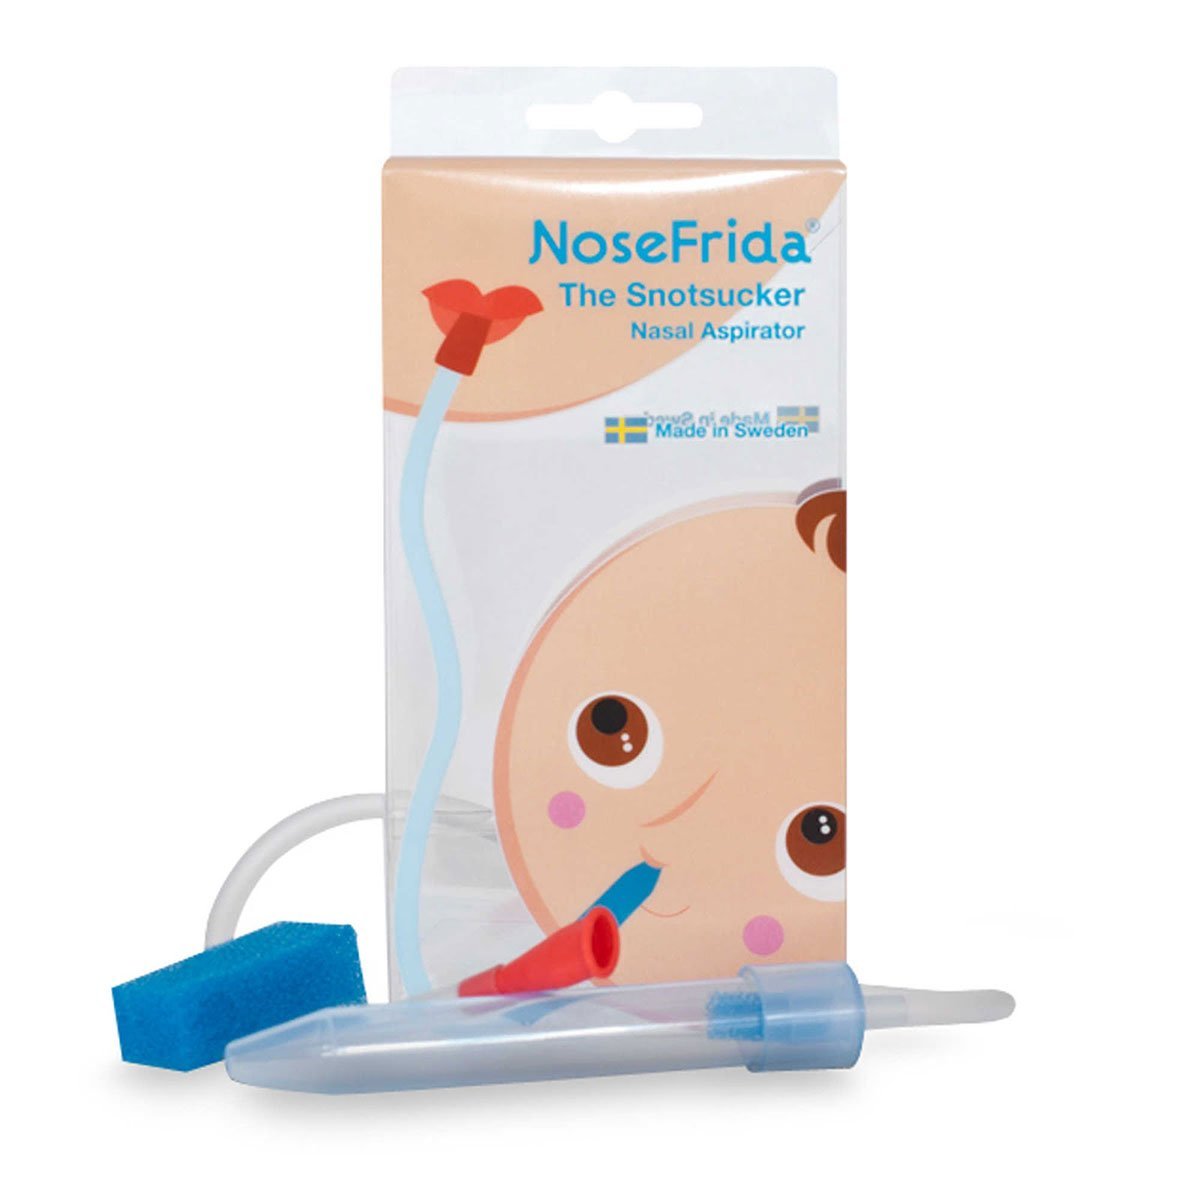 FridayBaby - Baby Nasal Aspirator NoseFrida The Snotsucker